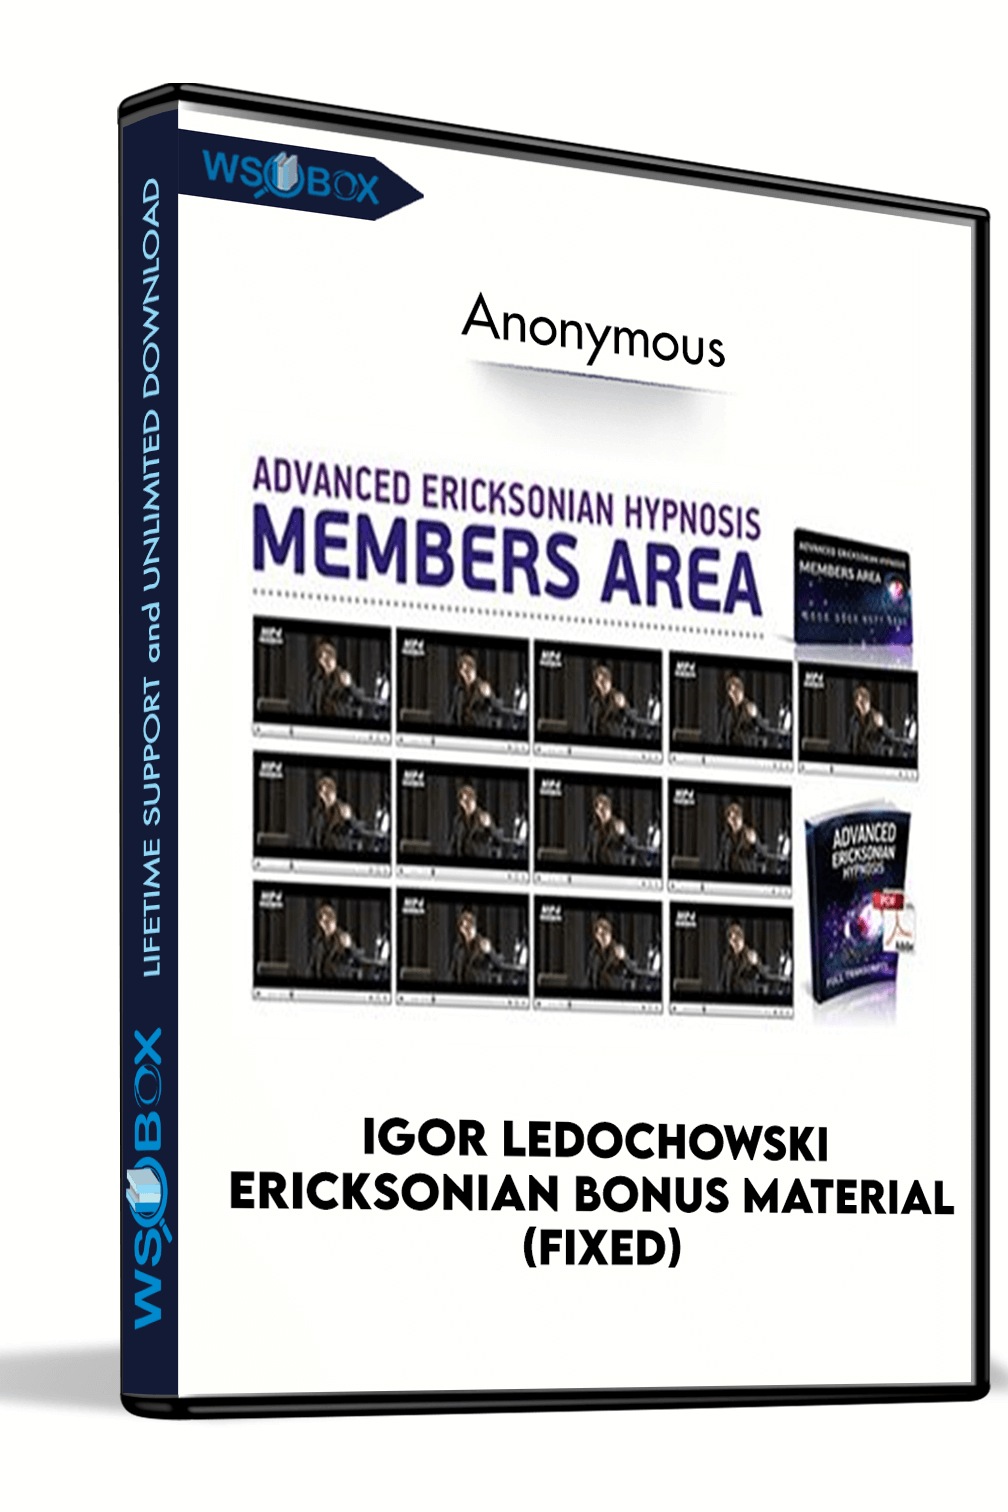 Igor Ledochowski Ericksonian Bonus Material (fixed) – Anonymous